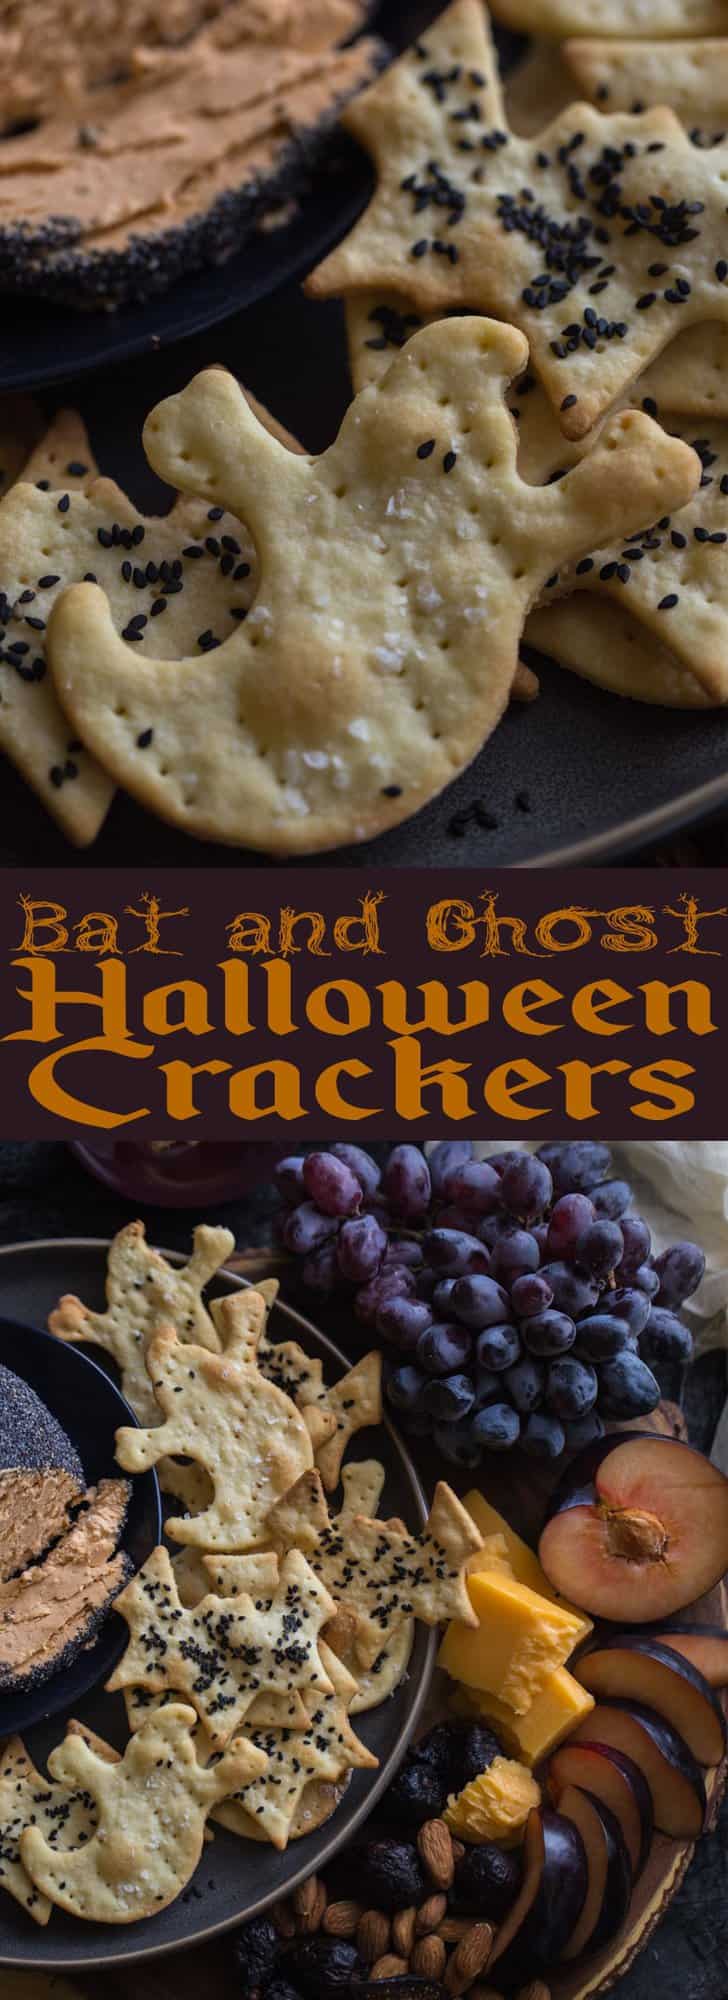  Bat and Ghost Halloween Crackers | Halloween Appetizers | Grown up Halloween ideas | Classy Halloween party | Not gross Halloween foods | Parmesan crackers